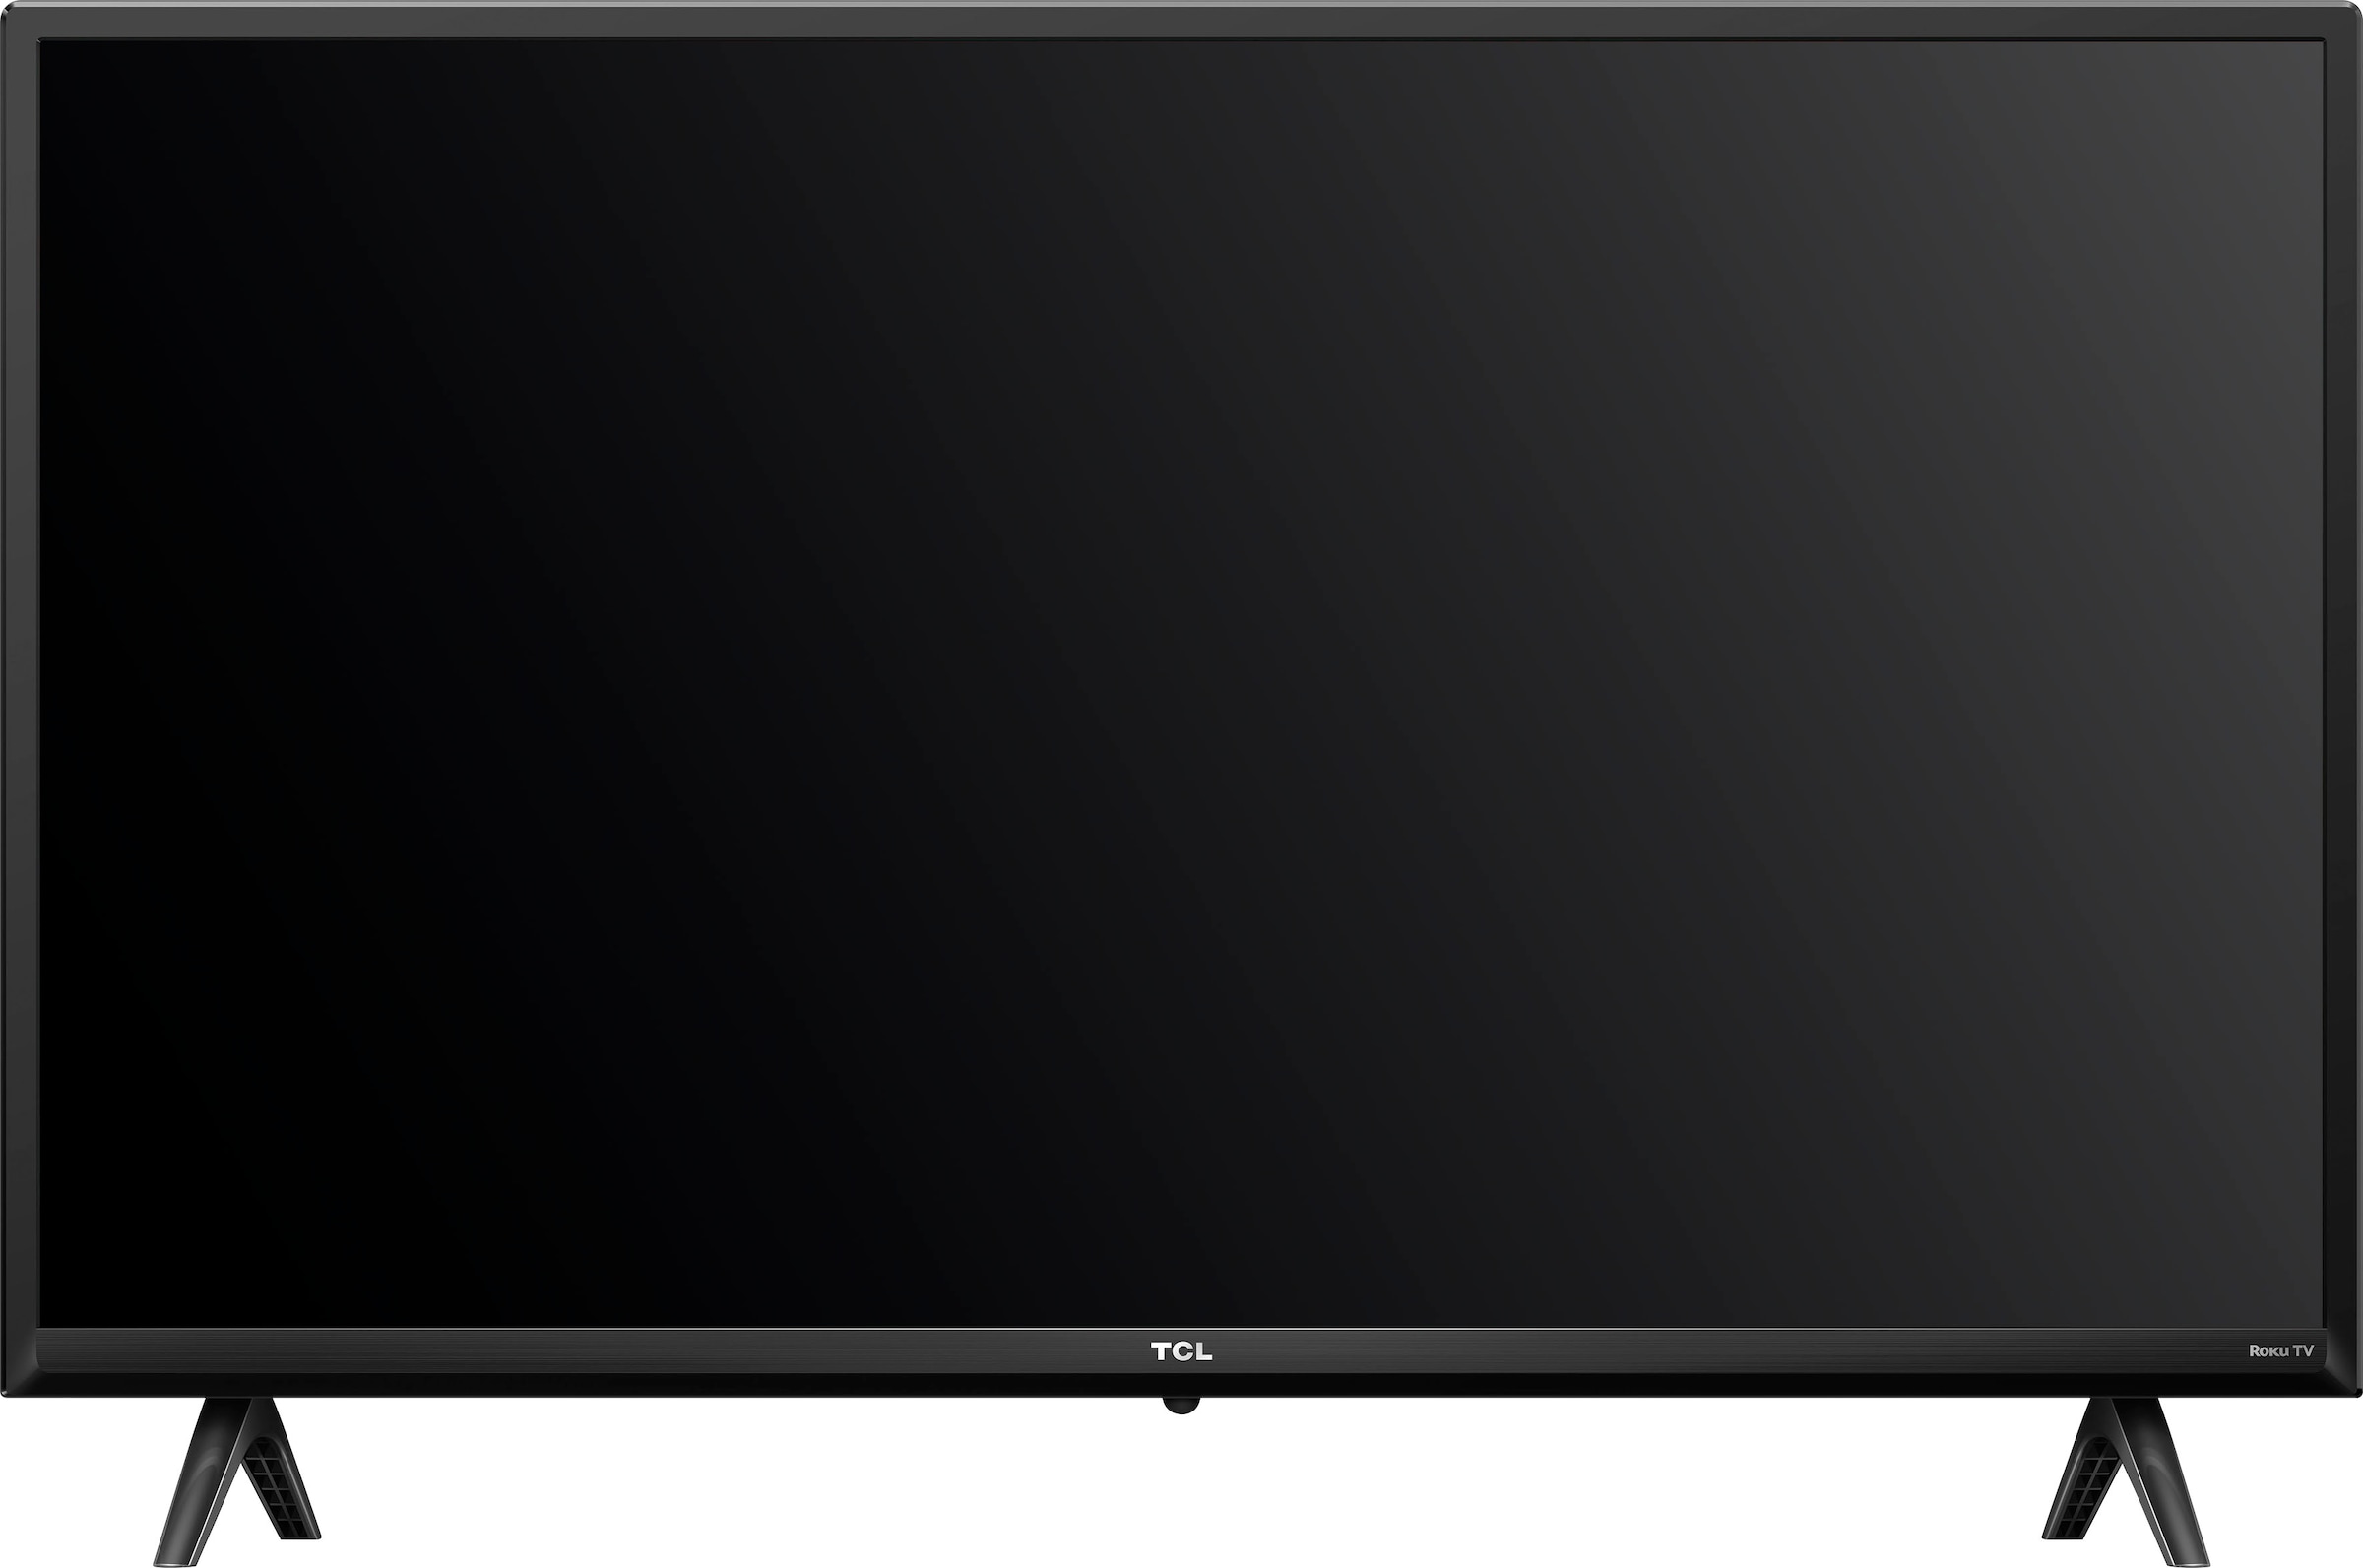 TCL LCD-LED Fernseher, 80 cm/32 Zoll, HD, Smart-TV, Roku TV, Smart HDR, HDR10, Chromecast